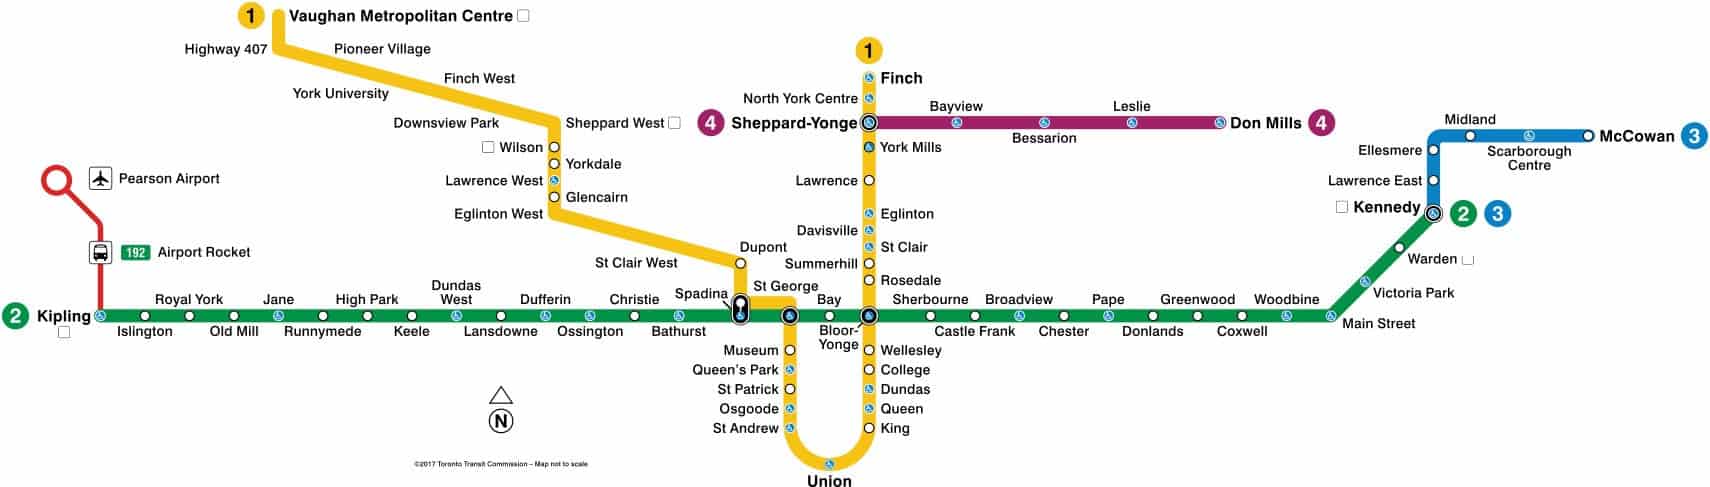 toronto-subway-map-full